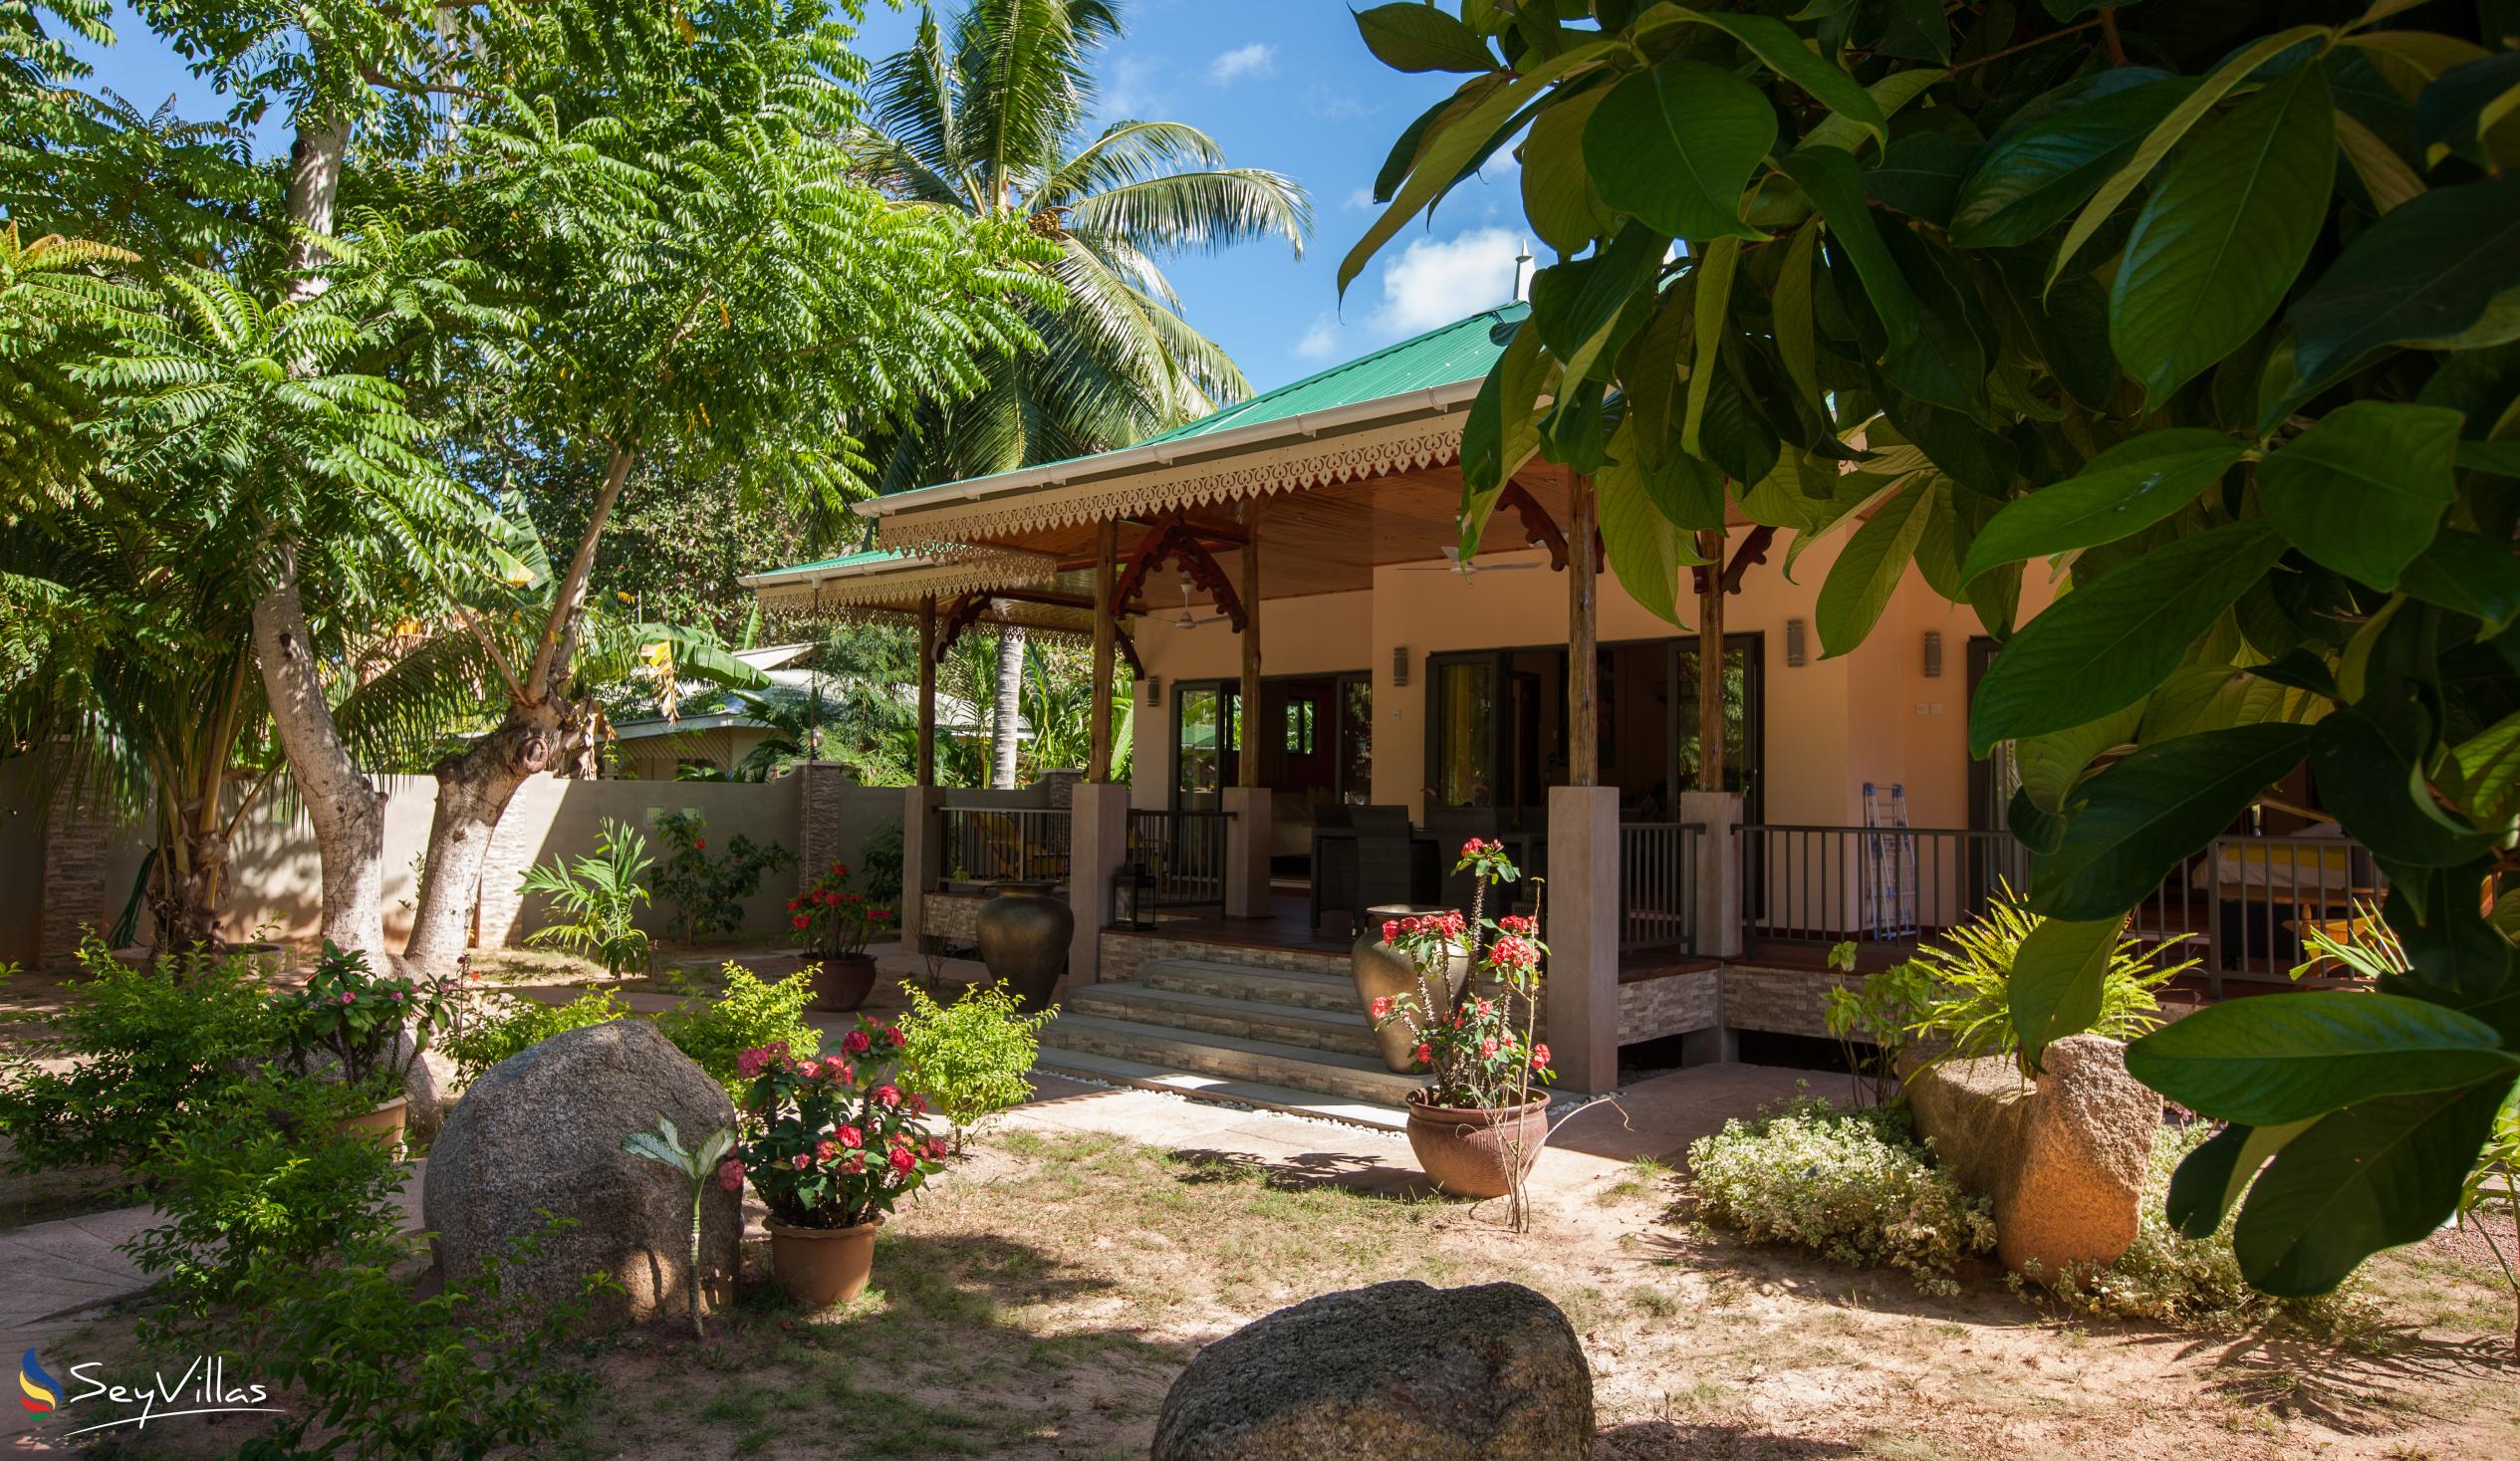 Foto 17: Casa de Leela - Aussenbereich - La Digue (Seychellen)